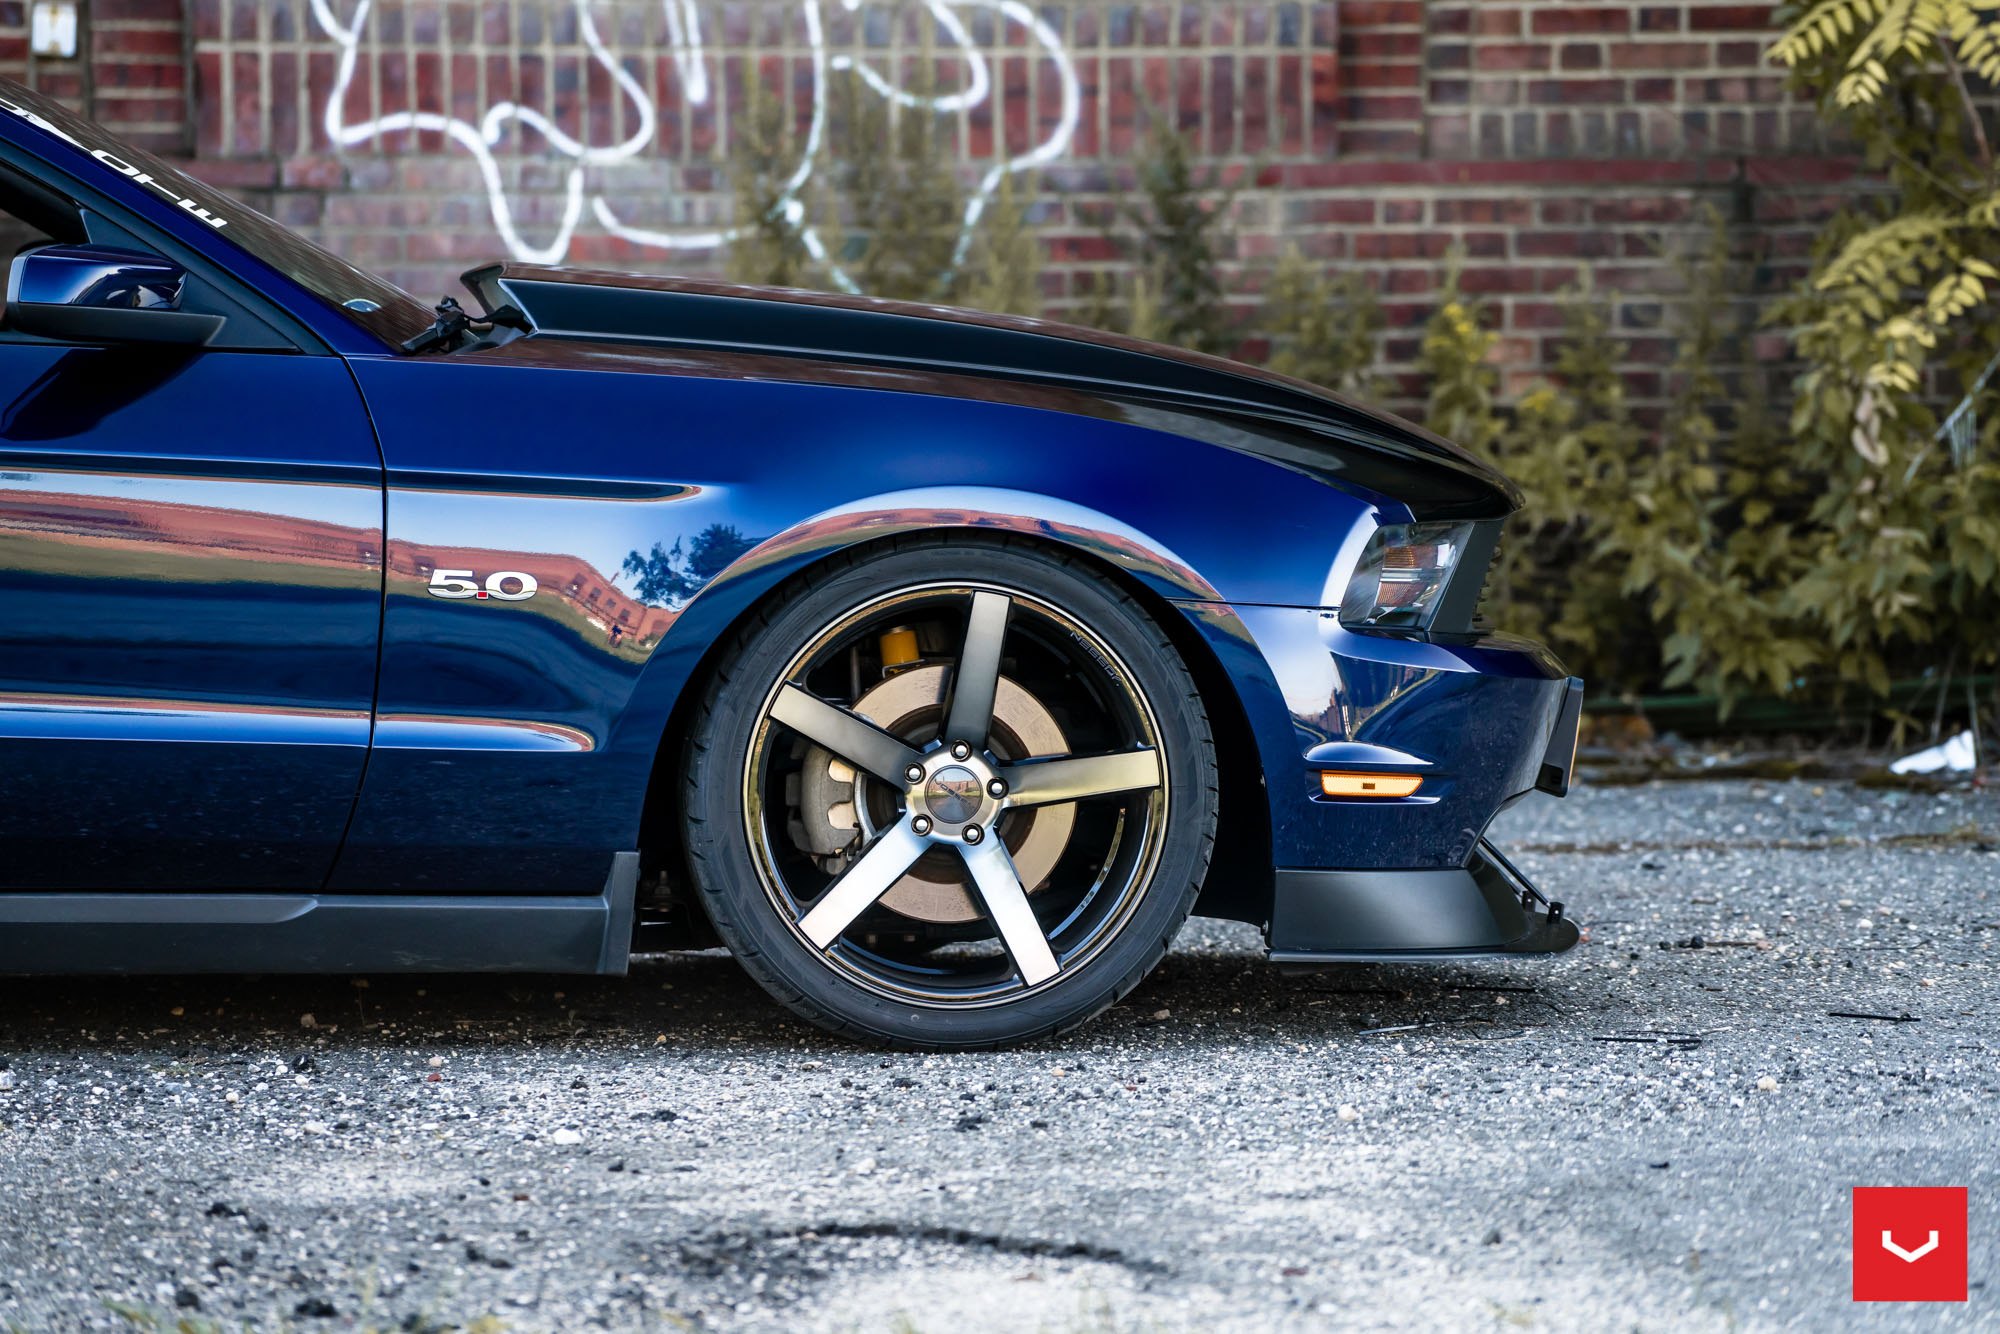 Vossen CV3-R Wheels on Blue Ford Mustang - Photo by Vossen